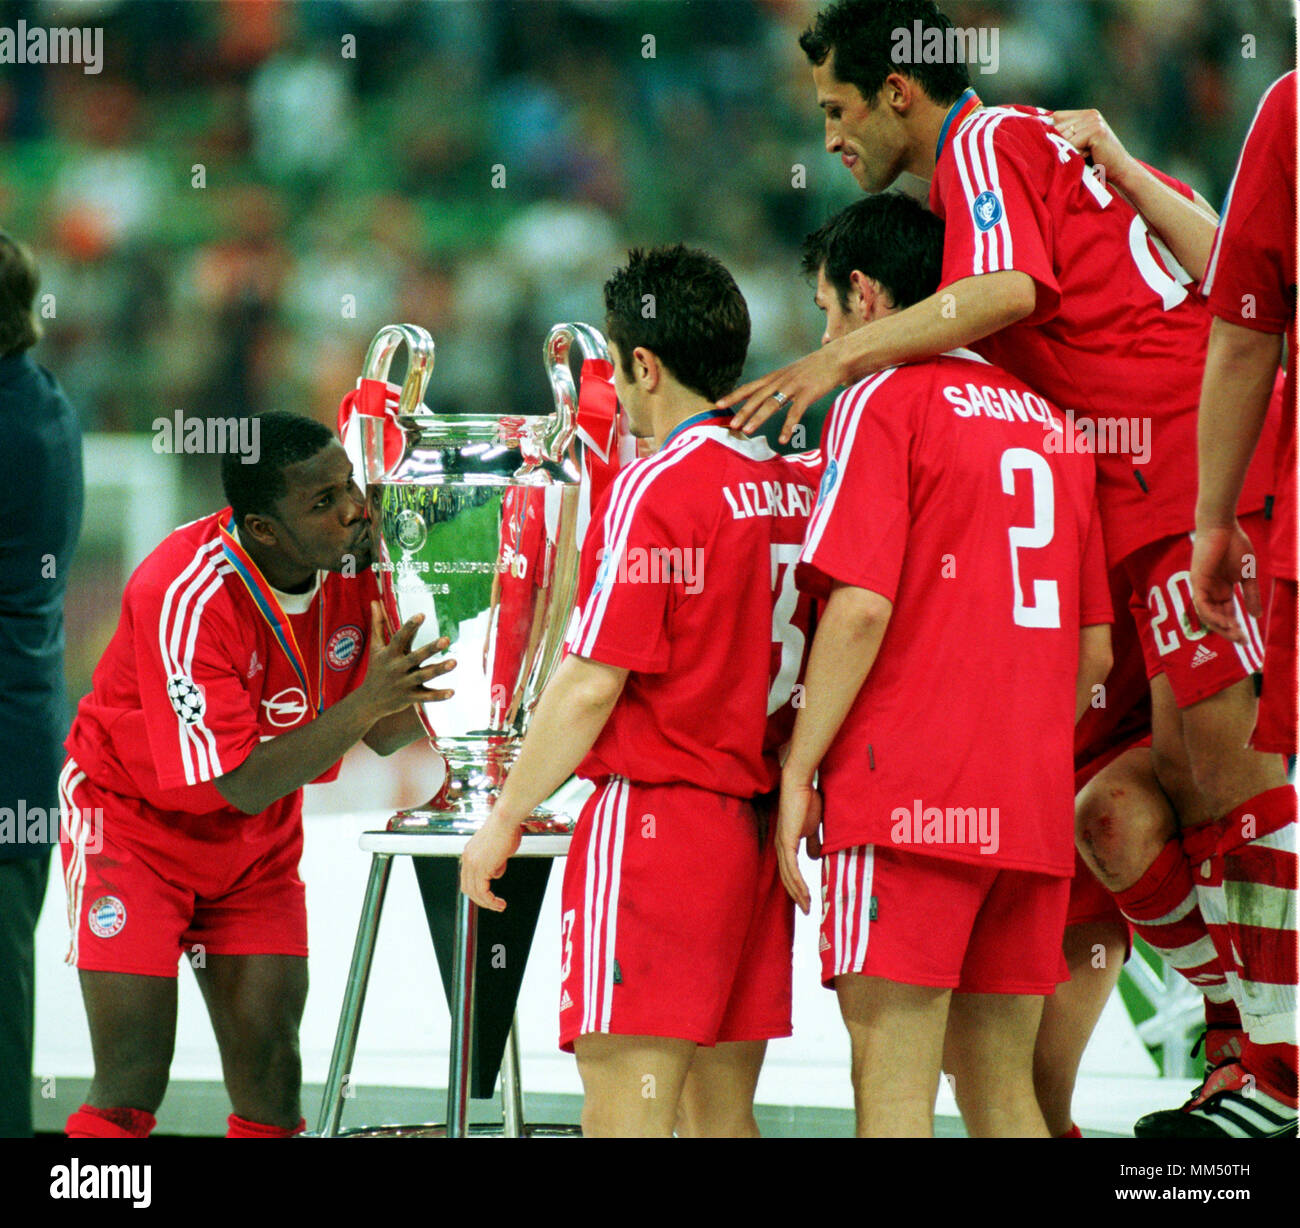 2001 uefa champions league final